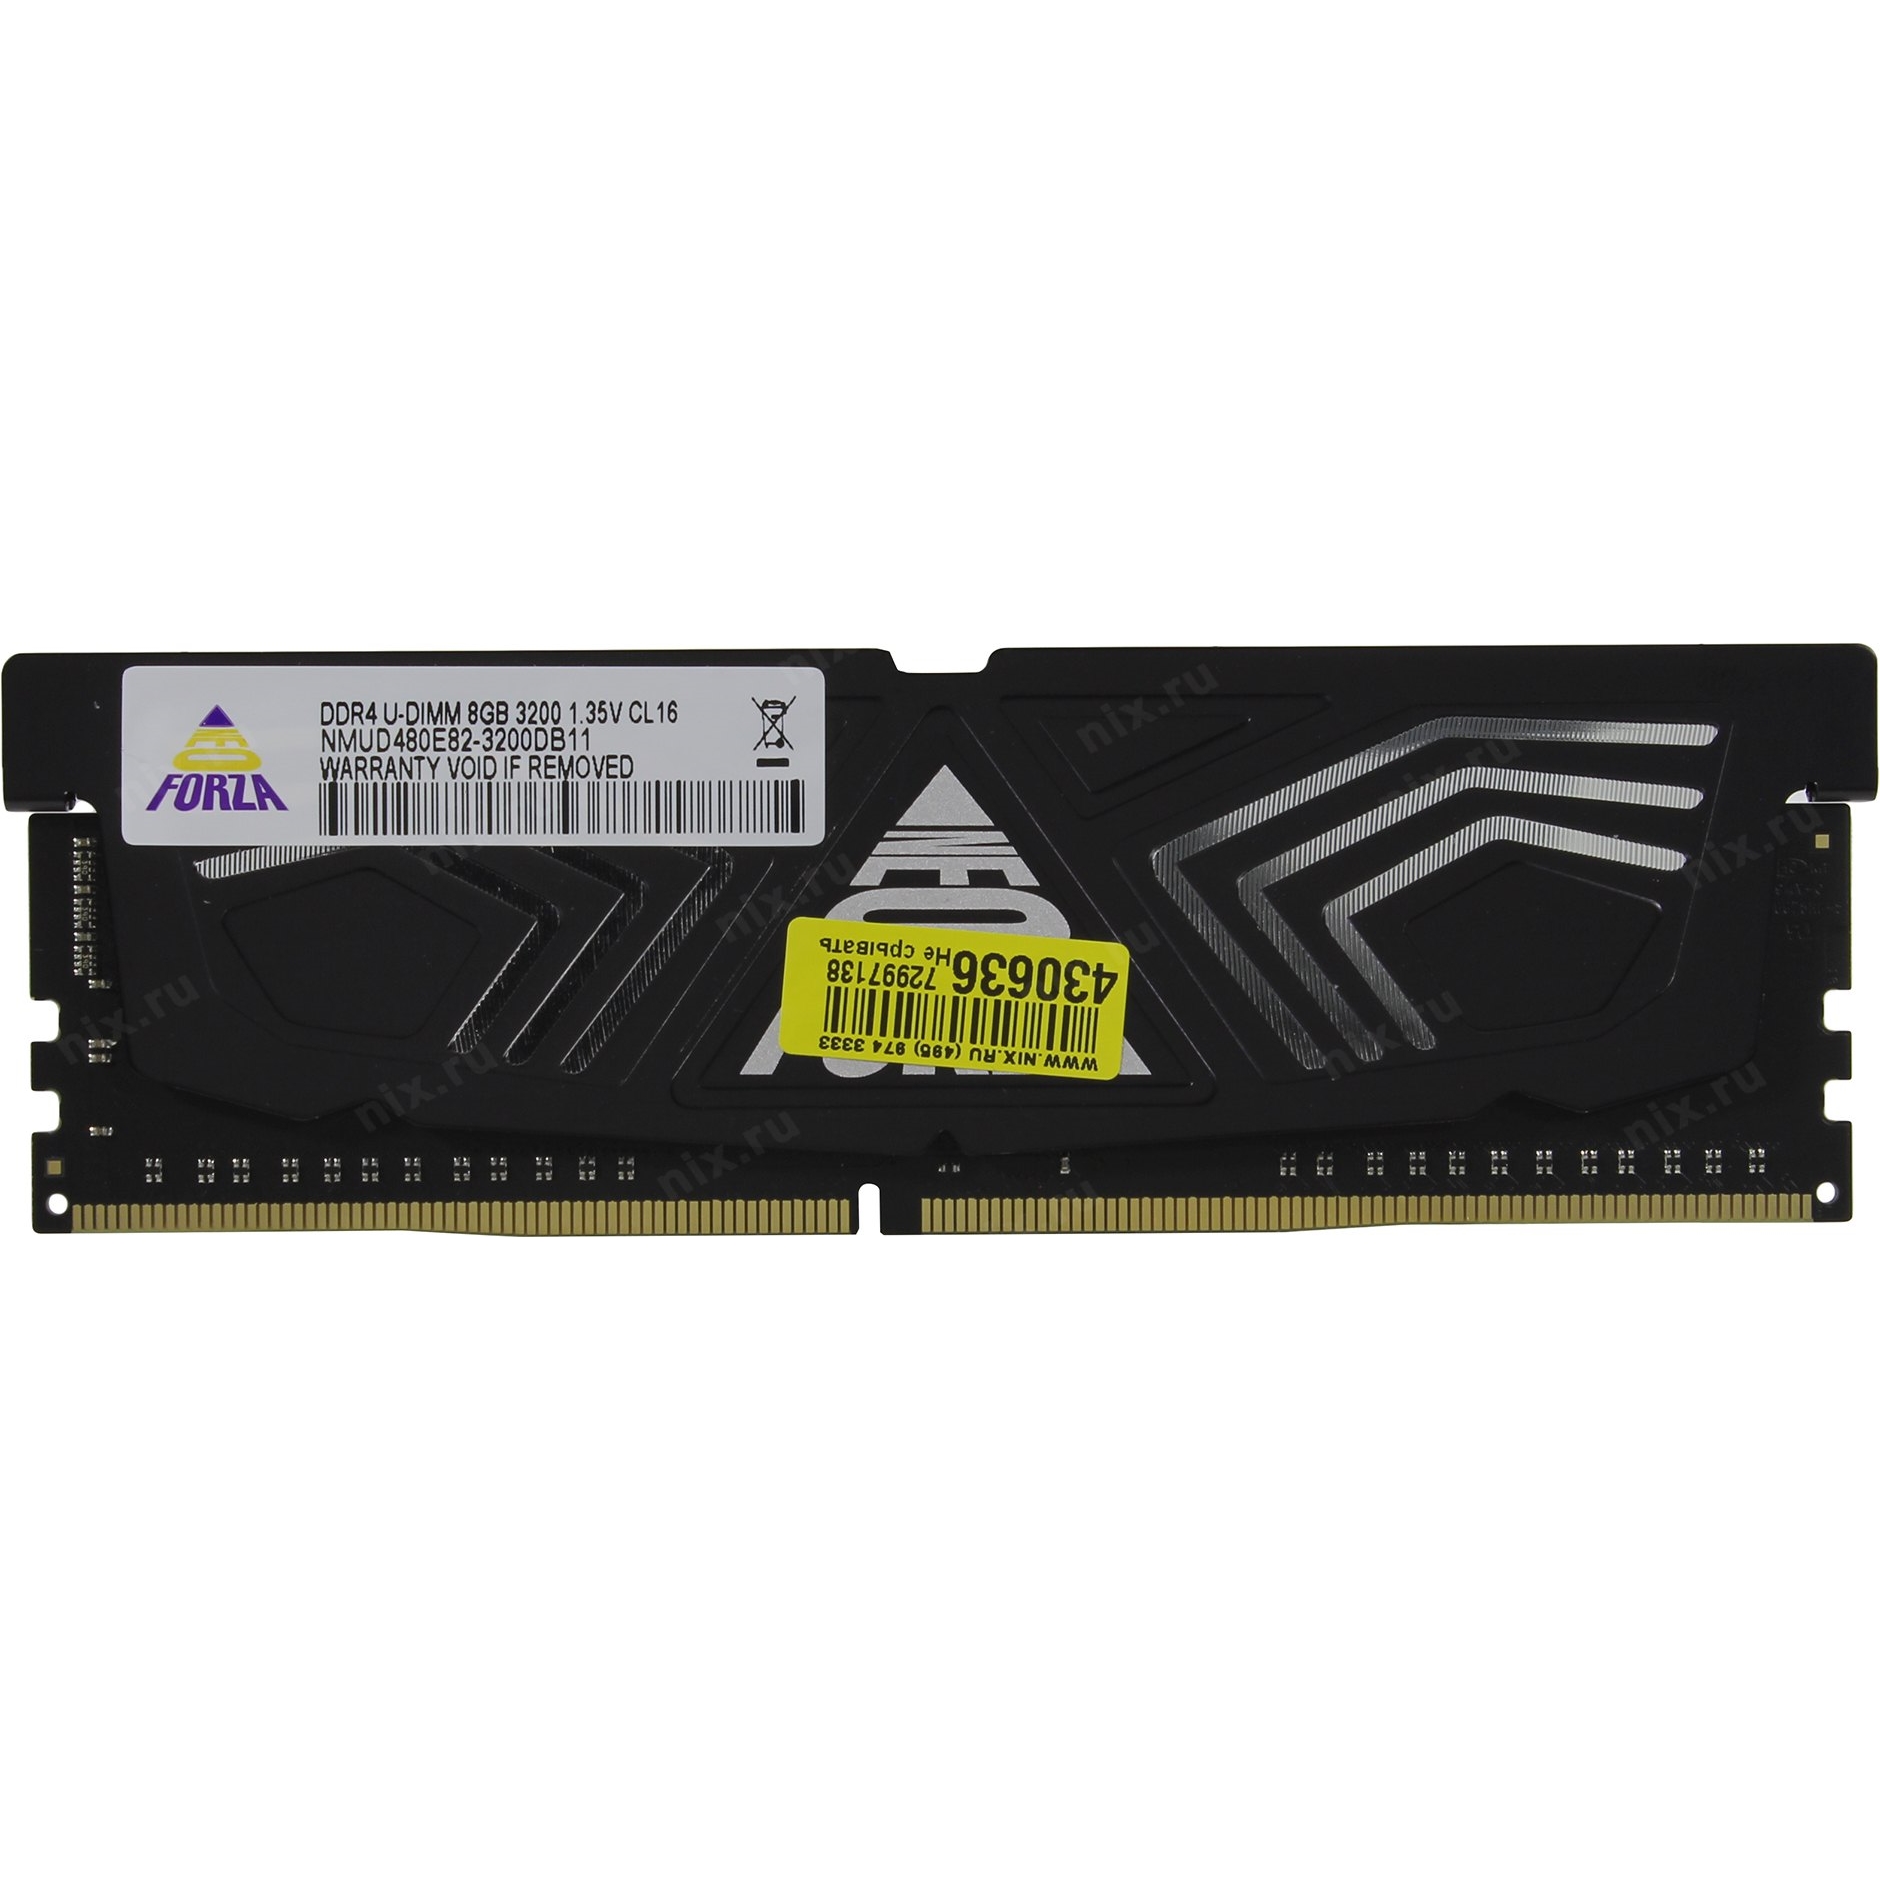 NEOFORZA 8GB 3200MHZ DDR4 GAMING CL16 SOĞUTUCULU NMUD480E82-3200DB11 PC RAM